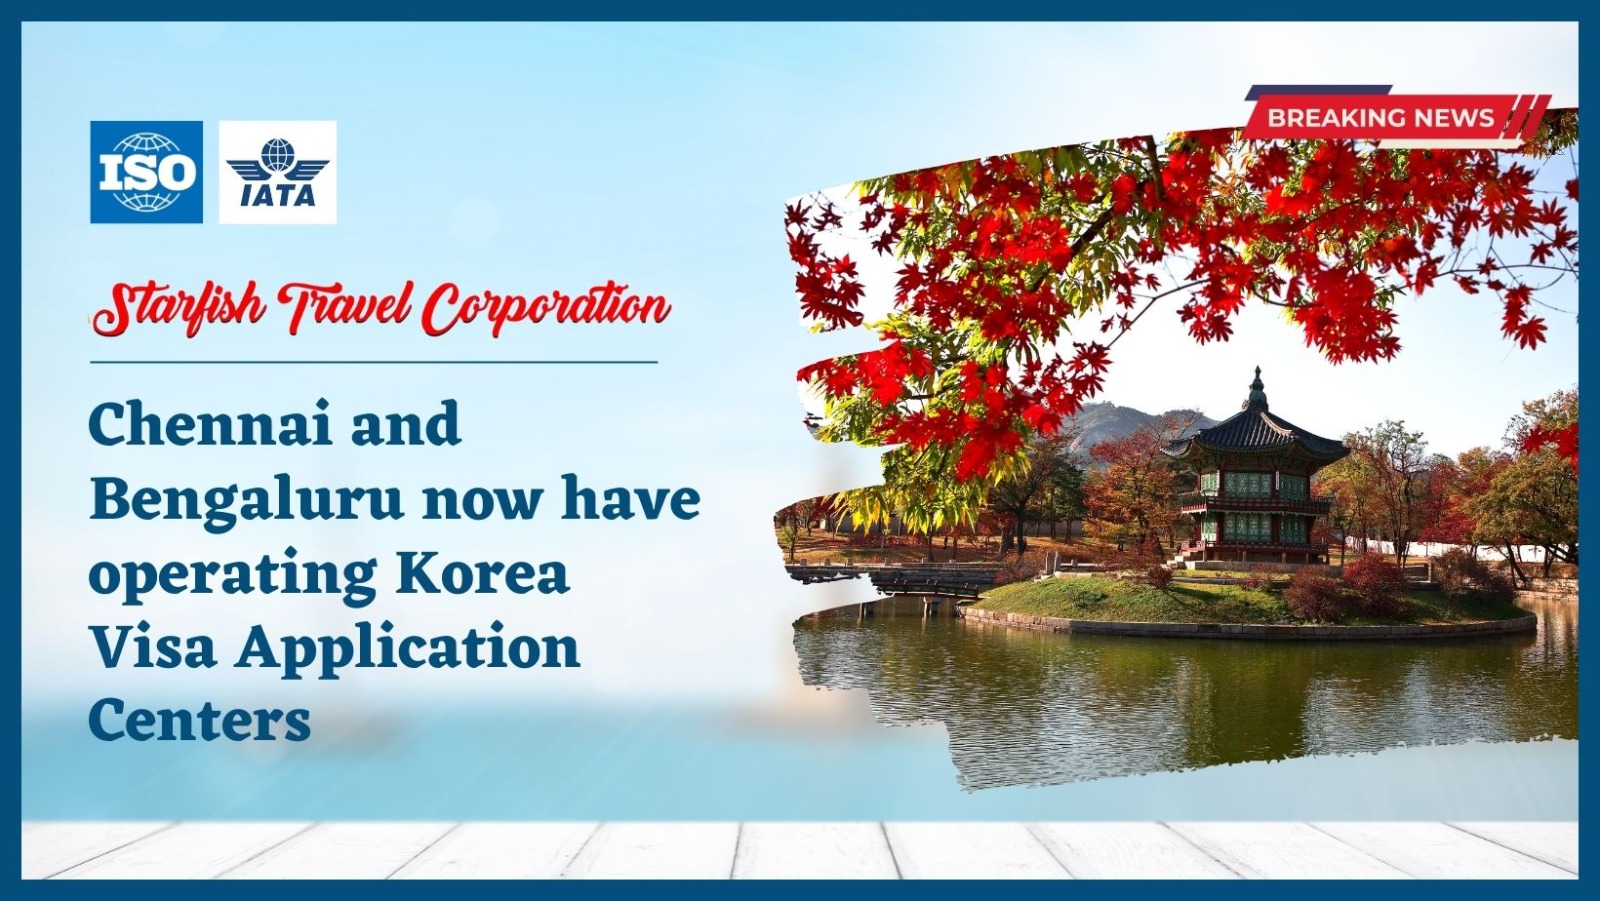 Chennai and Bengaluru now have operating Korea Visa Application Centers